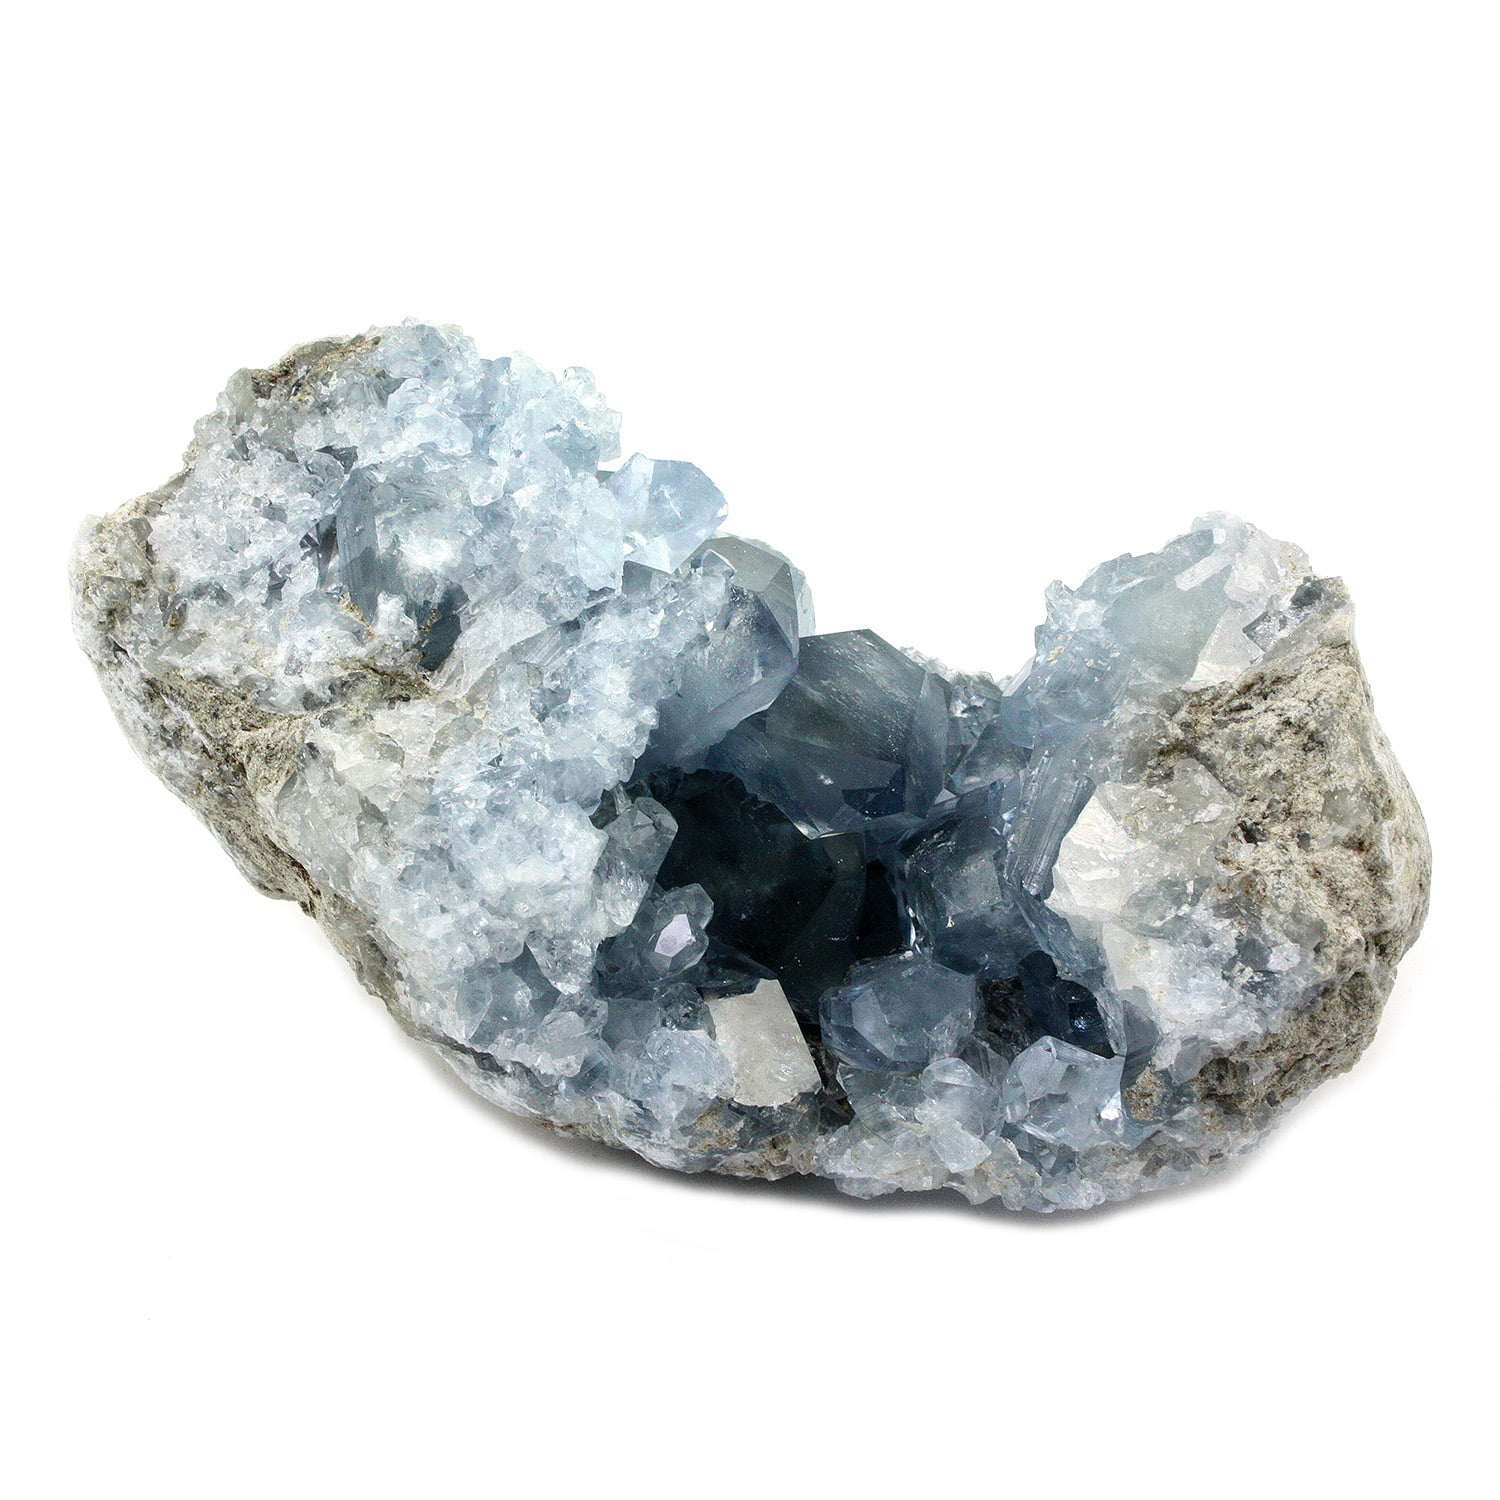 Natural Celestite Mineral Cluster from Madagascar 1ech 2-3" 80-110g ech 